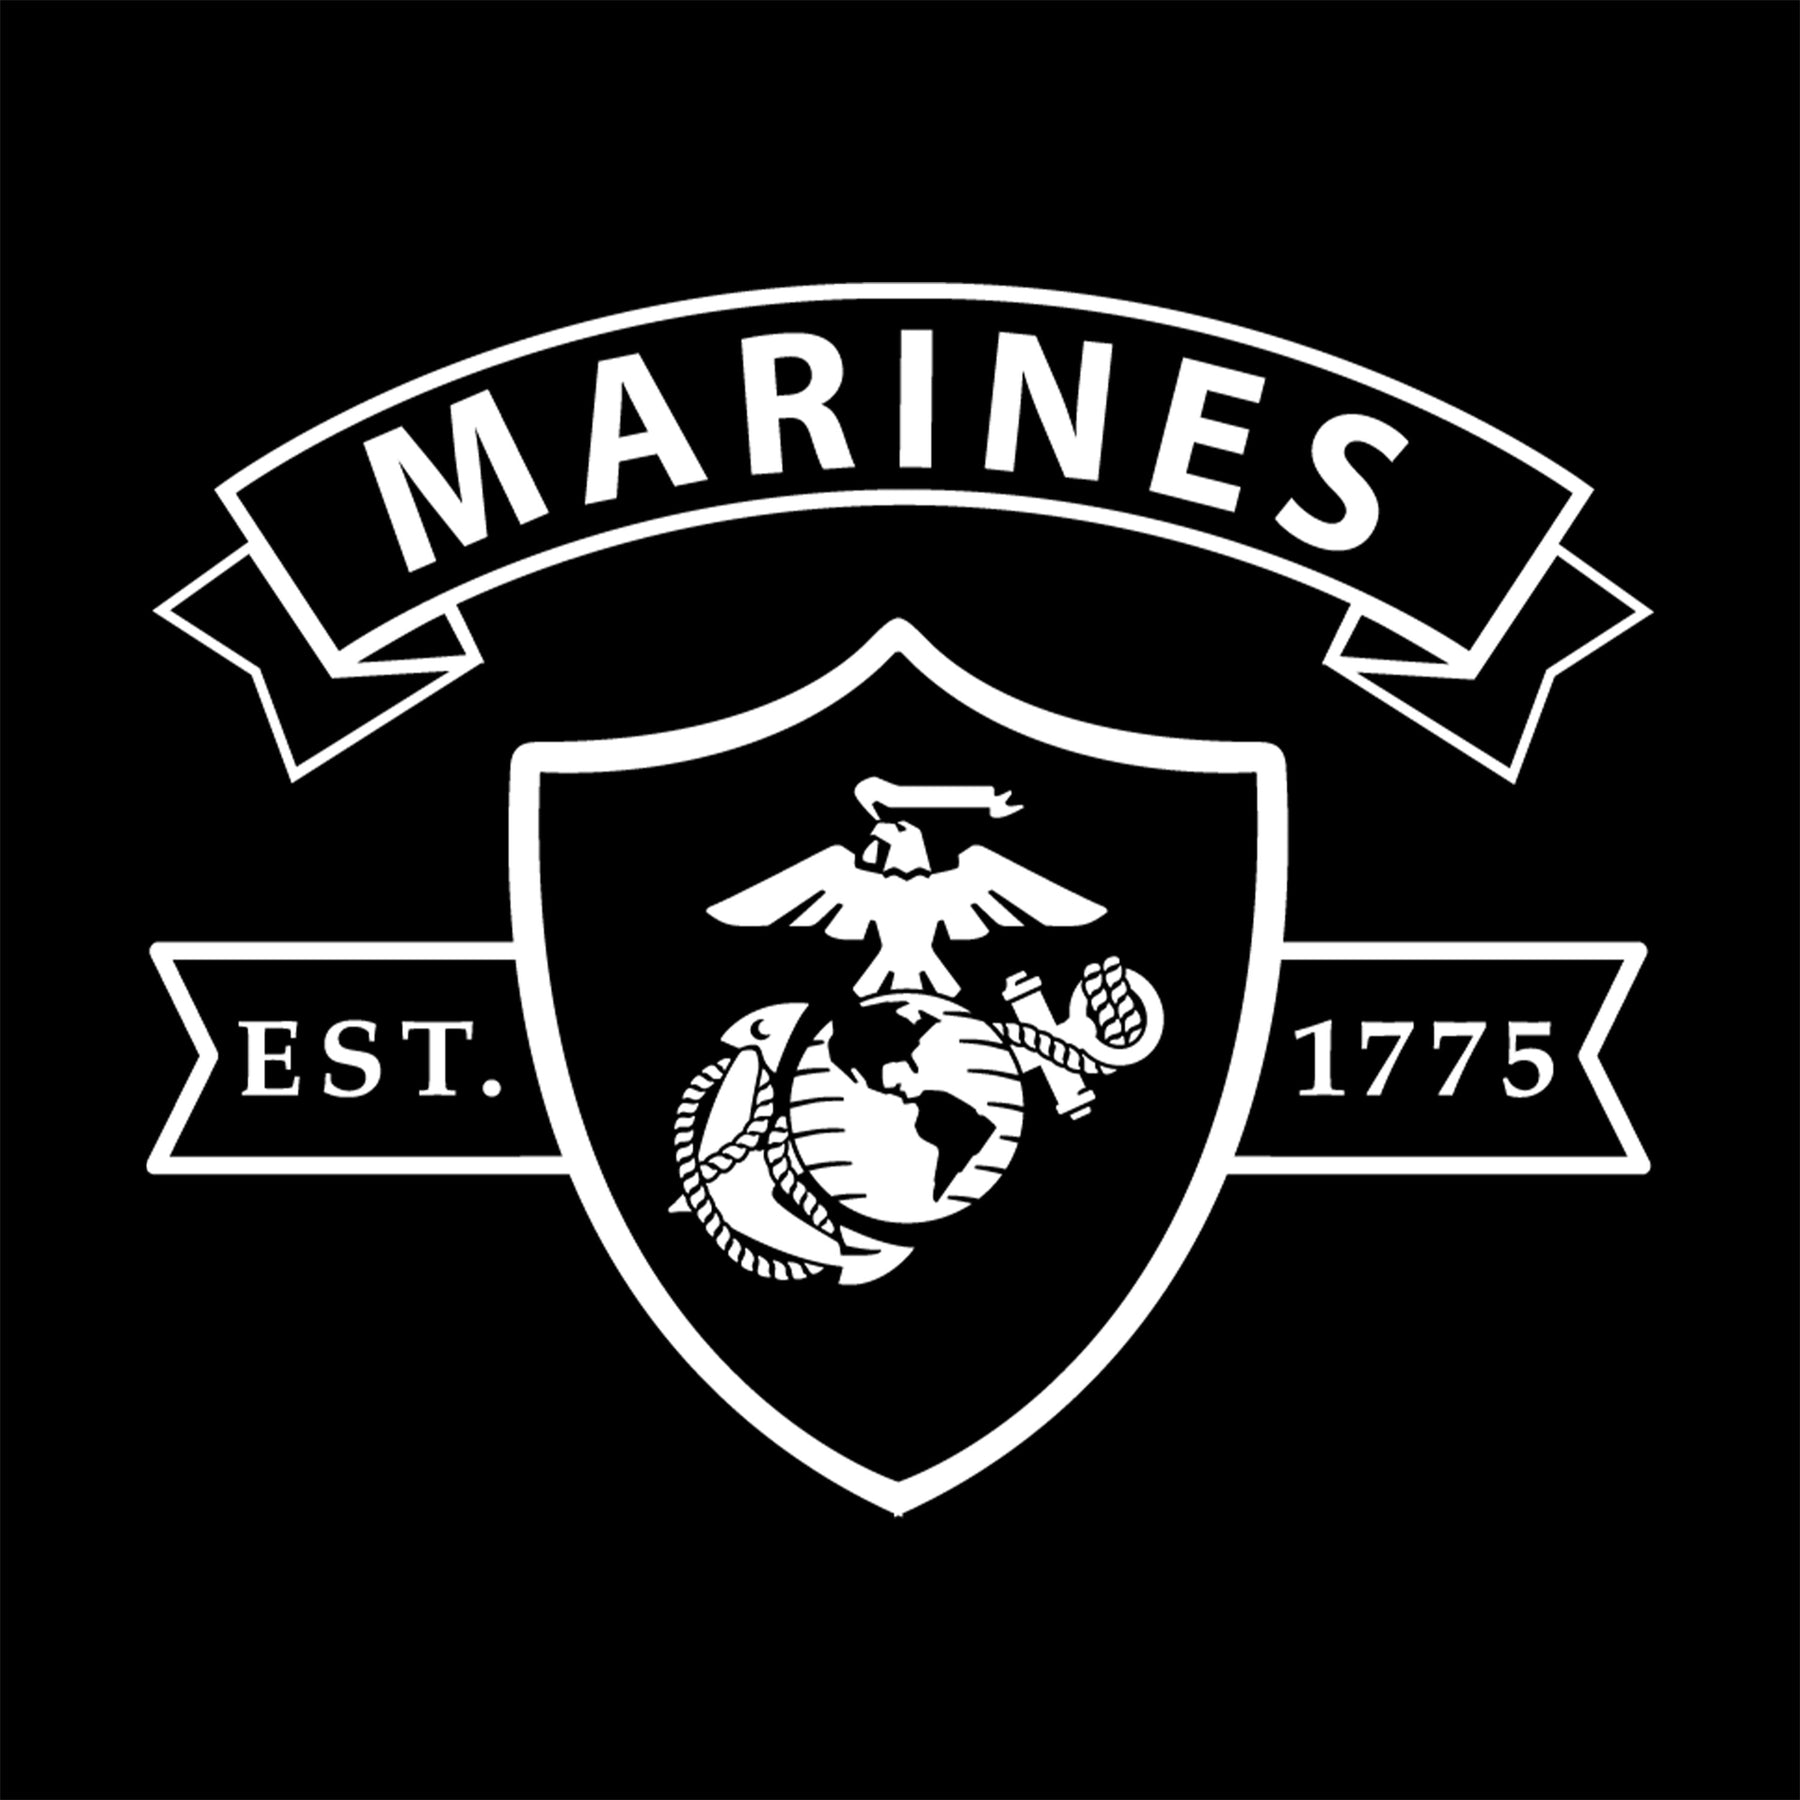 Marines Shield Chest Seal Dri-Fit Performance Long Sleeve T-Shirt